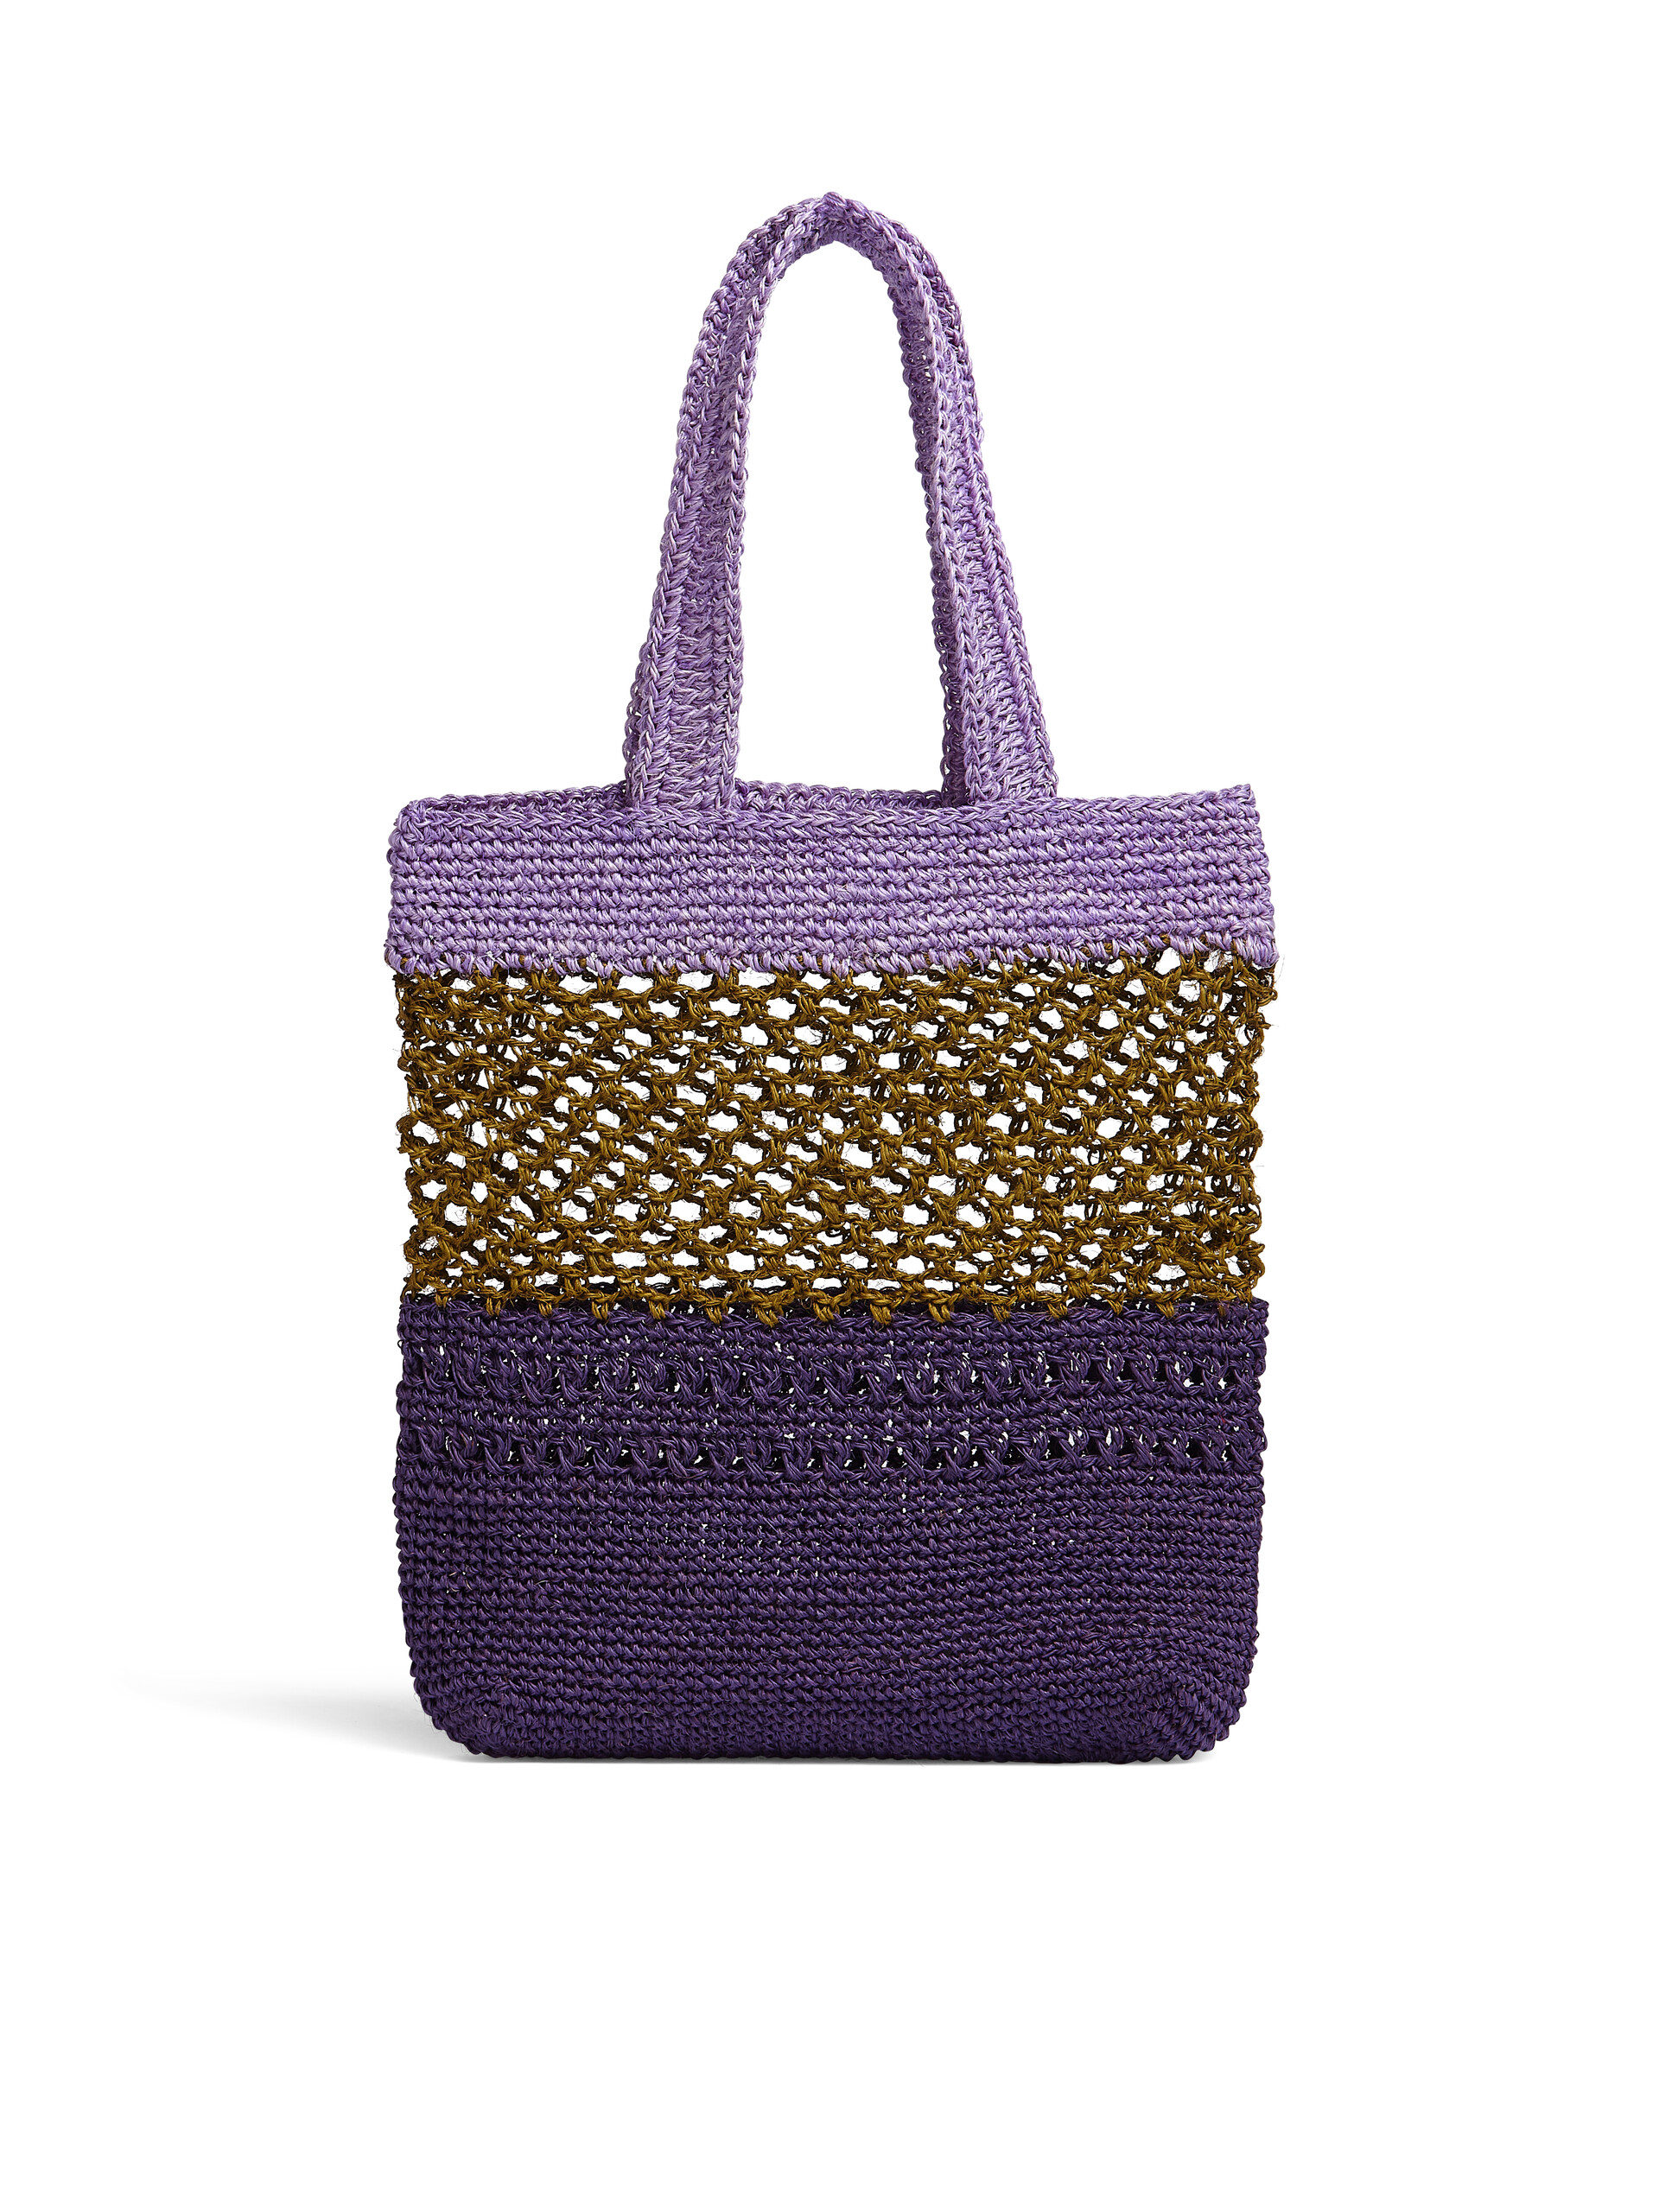 MARNI MARKET DRUM bag in purple and green natural fiber - Shopping Bags - Image 3